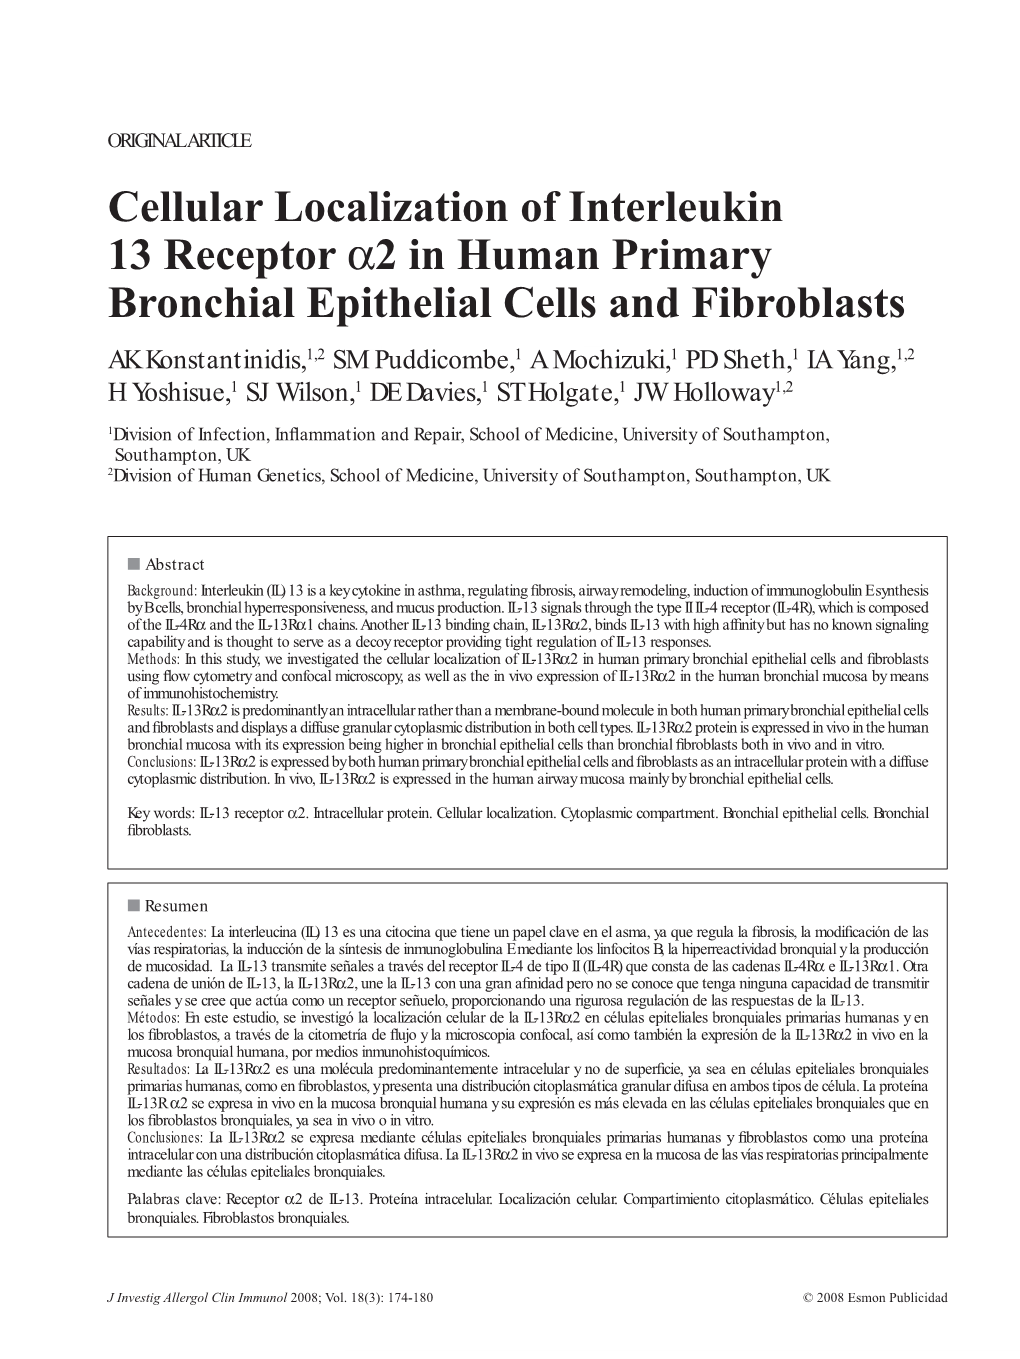 Cellular Localization of Interleukin 13 Receptor Α2 in Human Primary